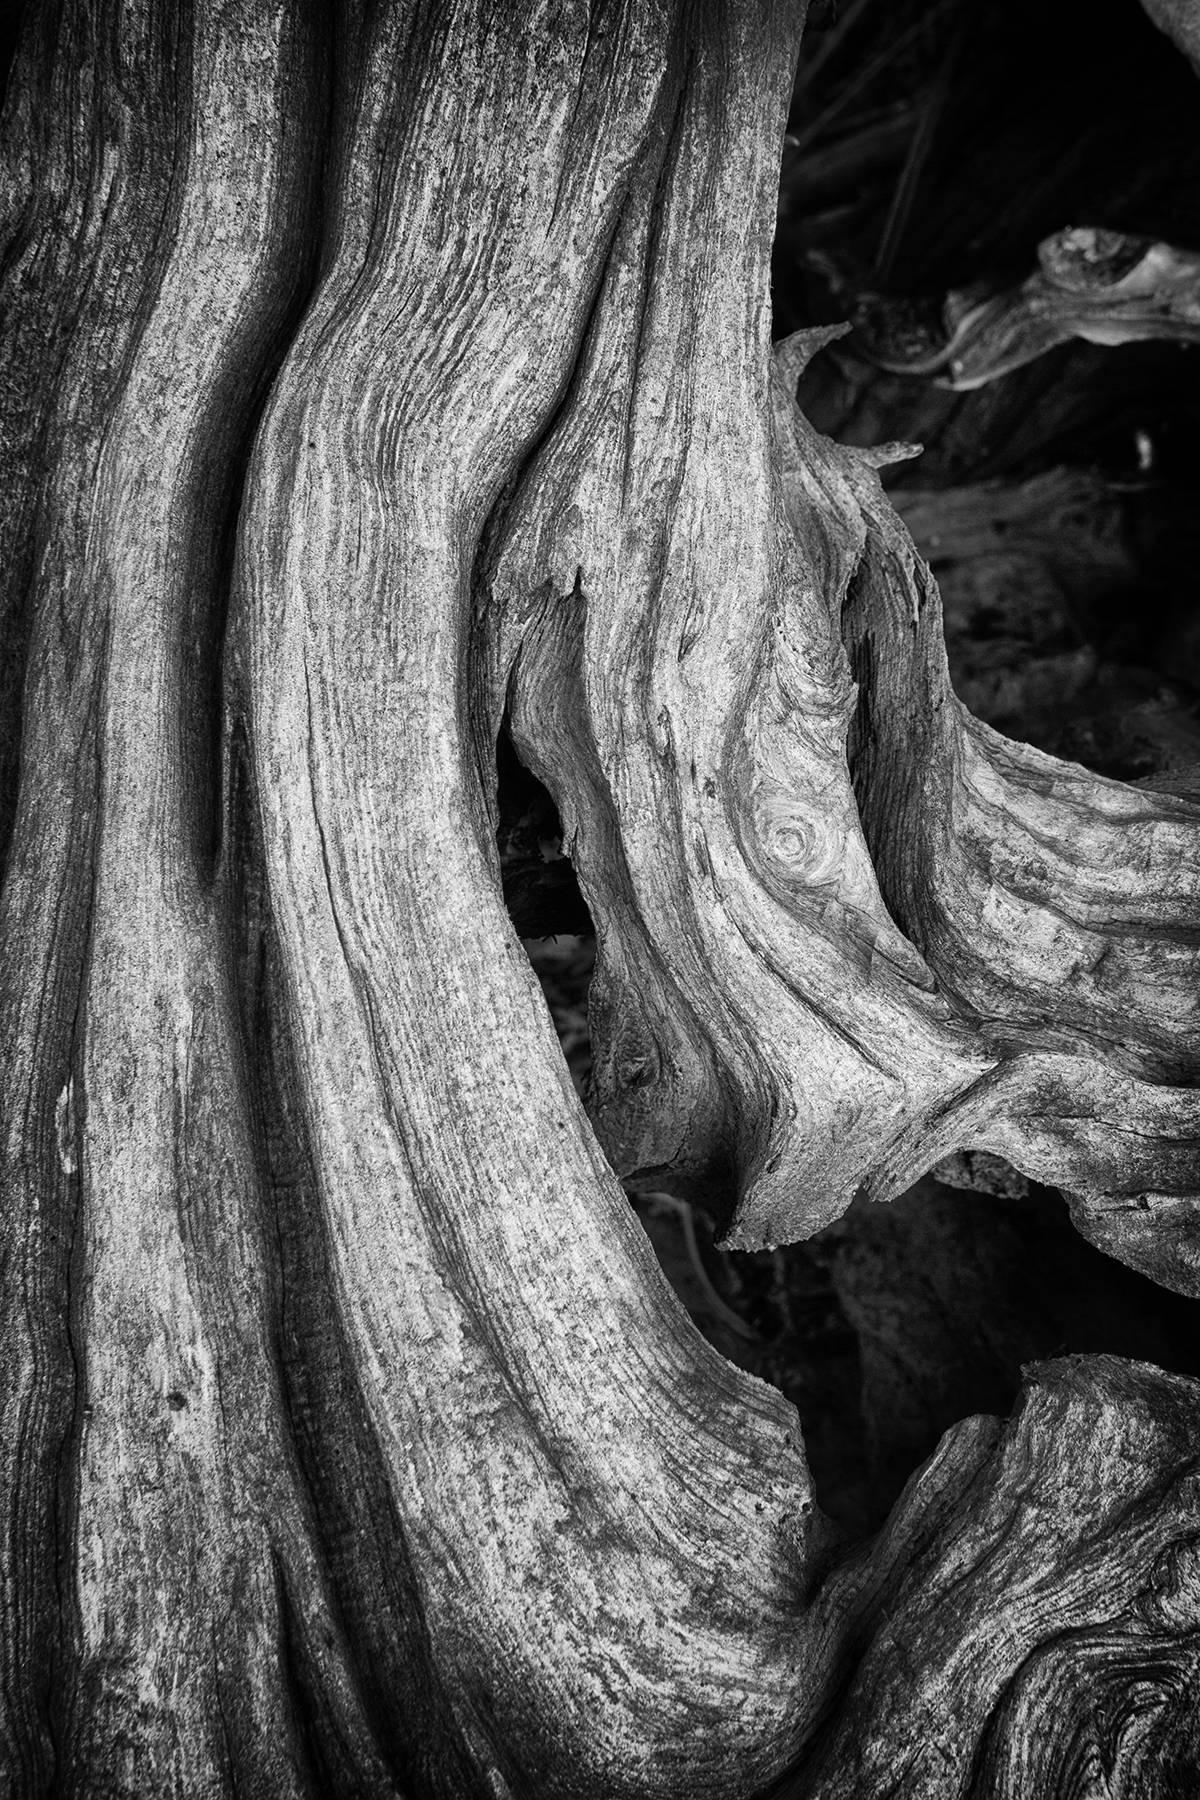 Rebecca Skinner Black and White Photograph - "Erosion #2", landscape, tree, roots, bark, black and white, photograph